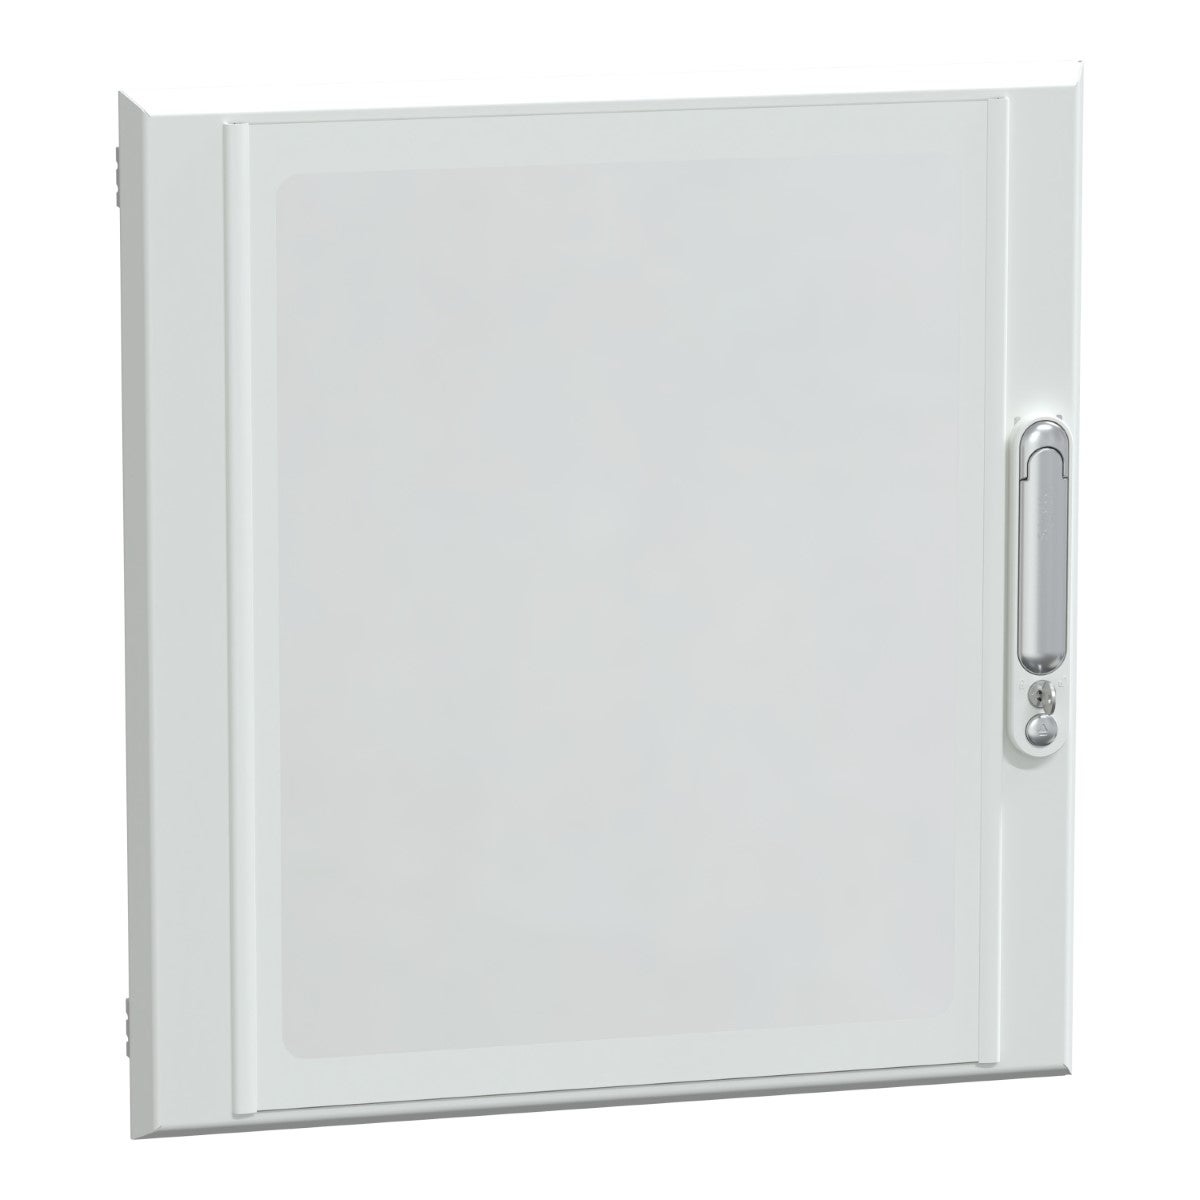 Door, PrismaSeT G, transparent type for enclosure, 12M, W600, IP30, white, RAL 9003